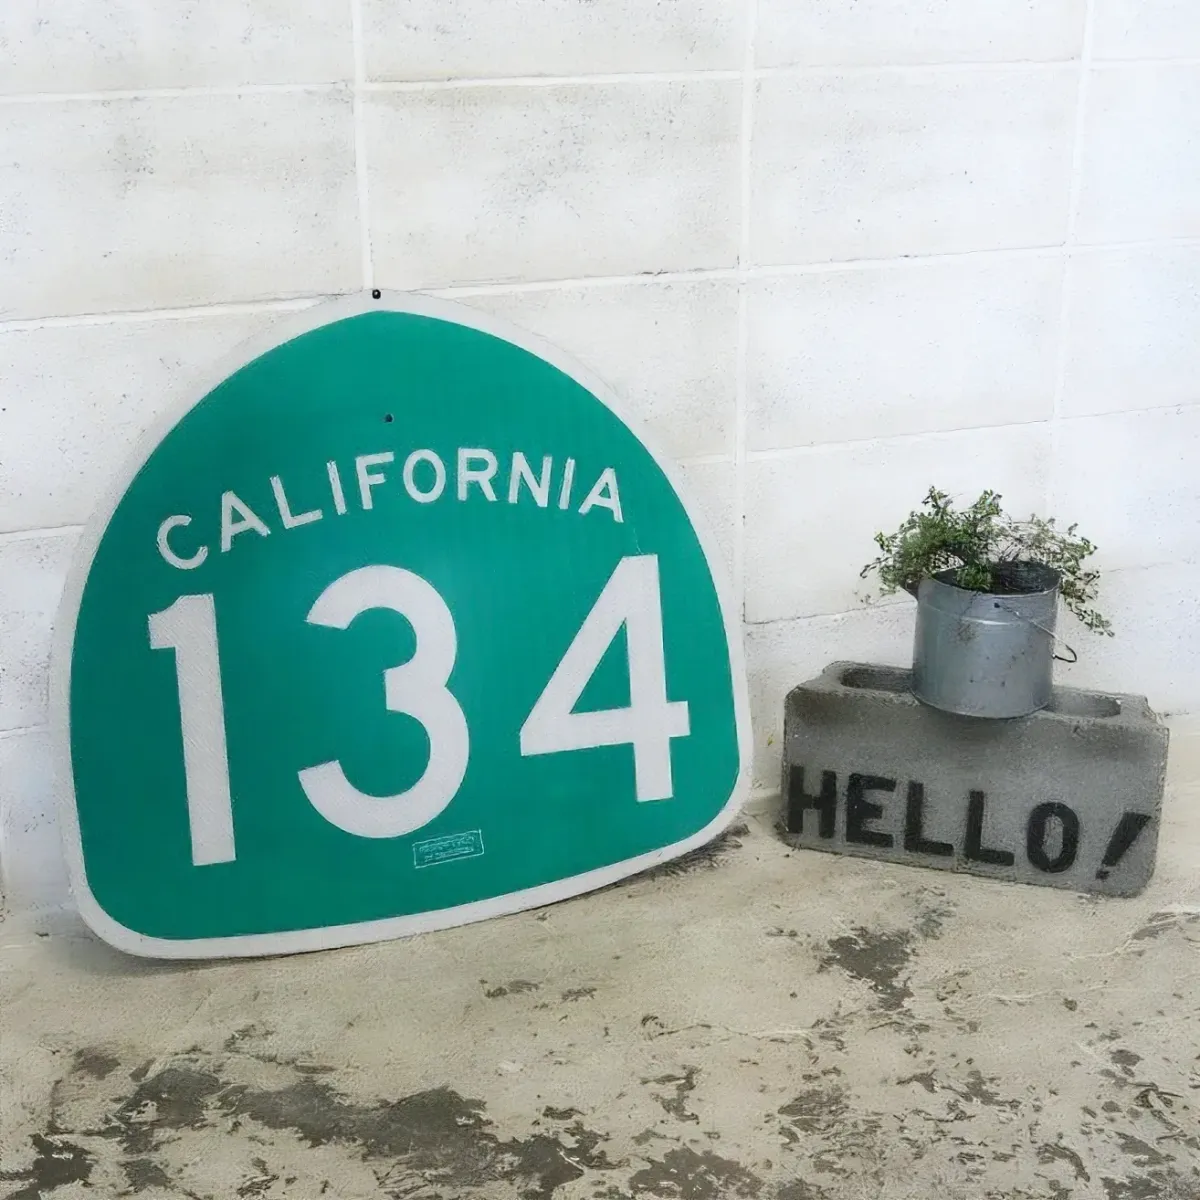 CALIFORNIA 134 ロードサイン